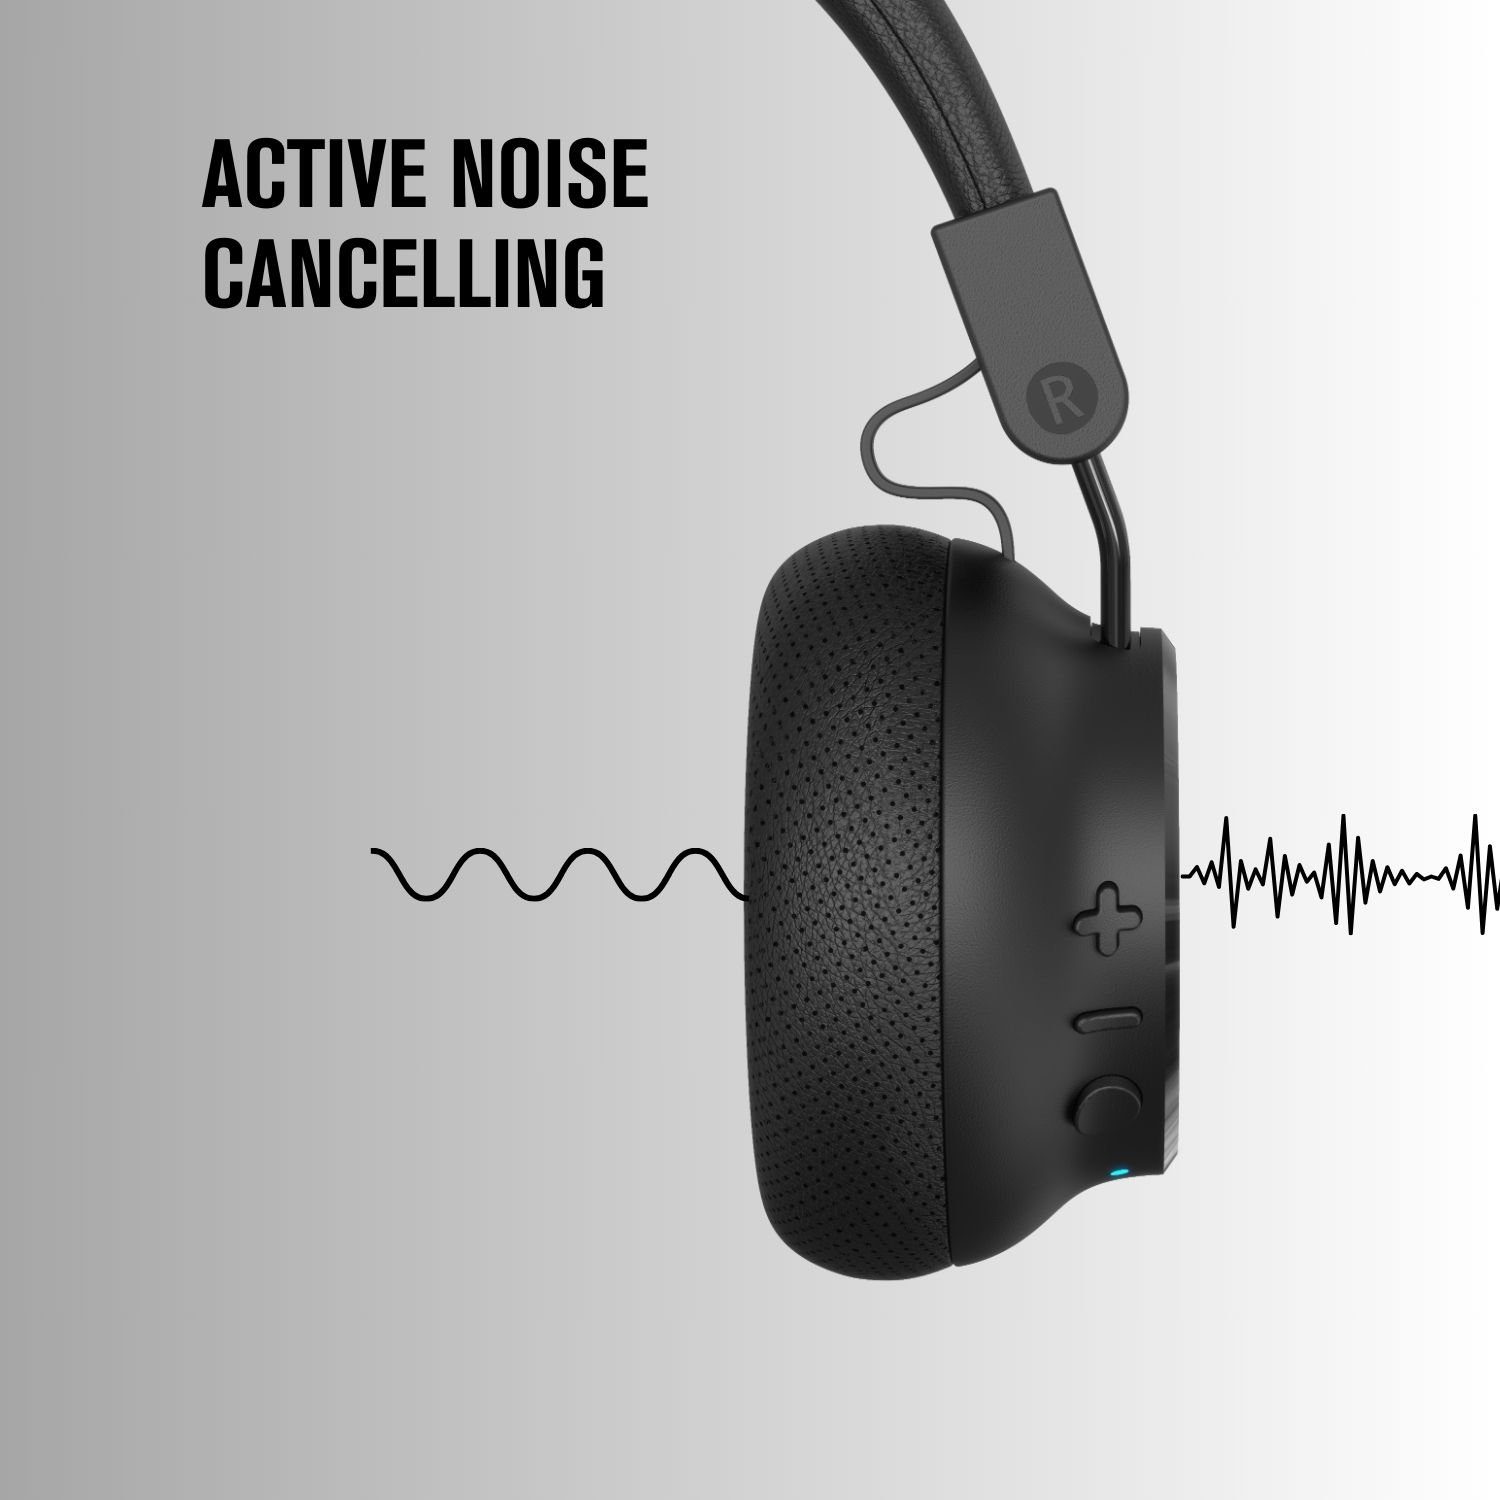 PRO Noise Std. Active Bluetooth, Google Akkulaufzeit) MOOVE35i (Siri, On-Ear-Kopfhörer Cancelling, Assistant, 70 Multipoint, MIIEGO Schnellladung,